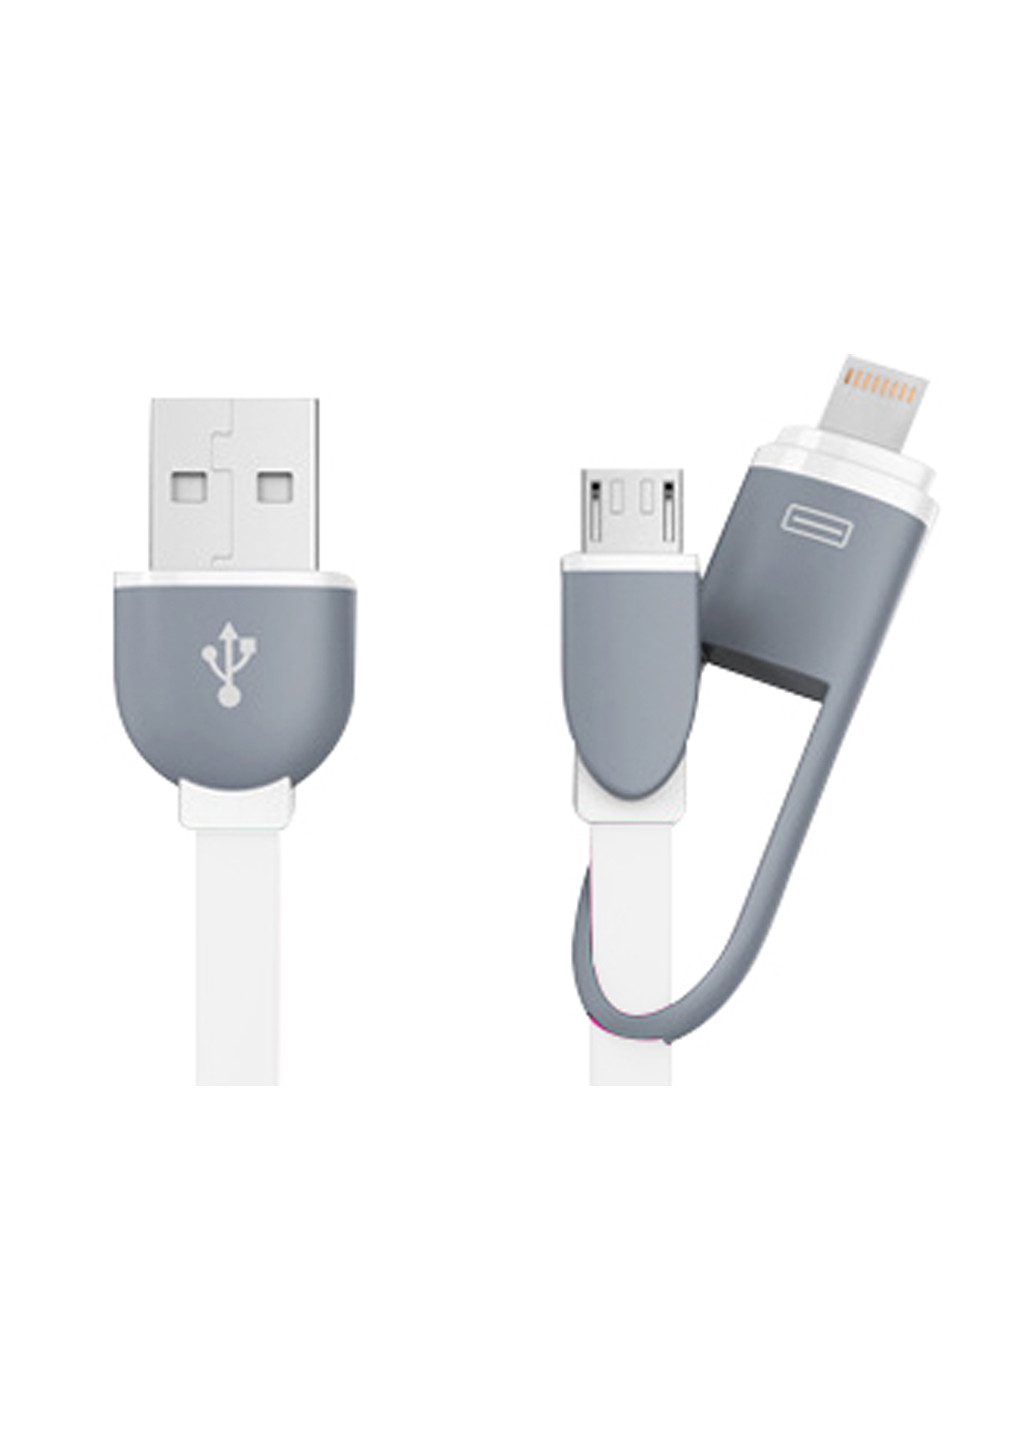 Кабель-брелок USB key White, 2 в 1 - Lightning, Micro USB, 25 см XoKo sc-201 (132572844)